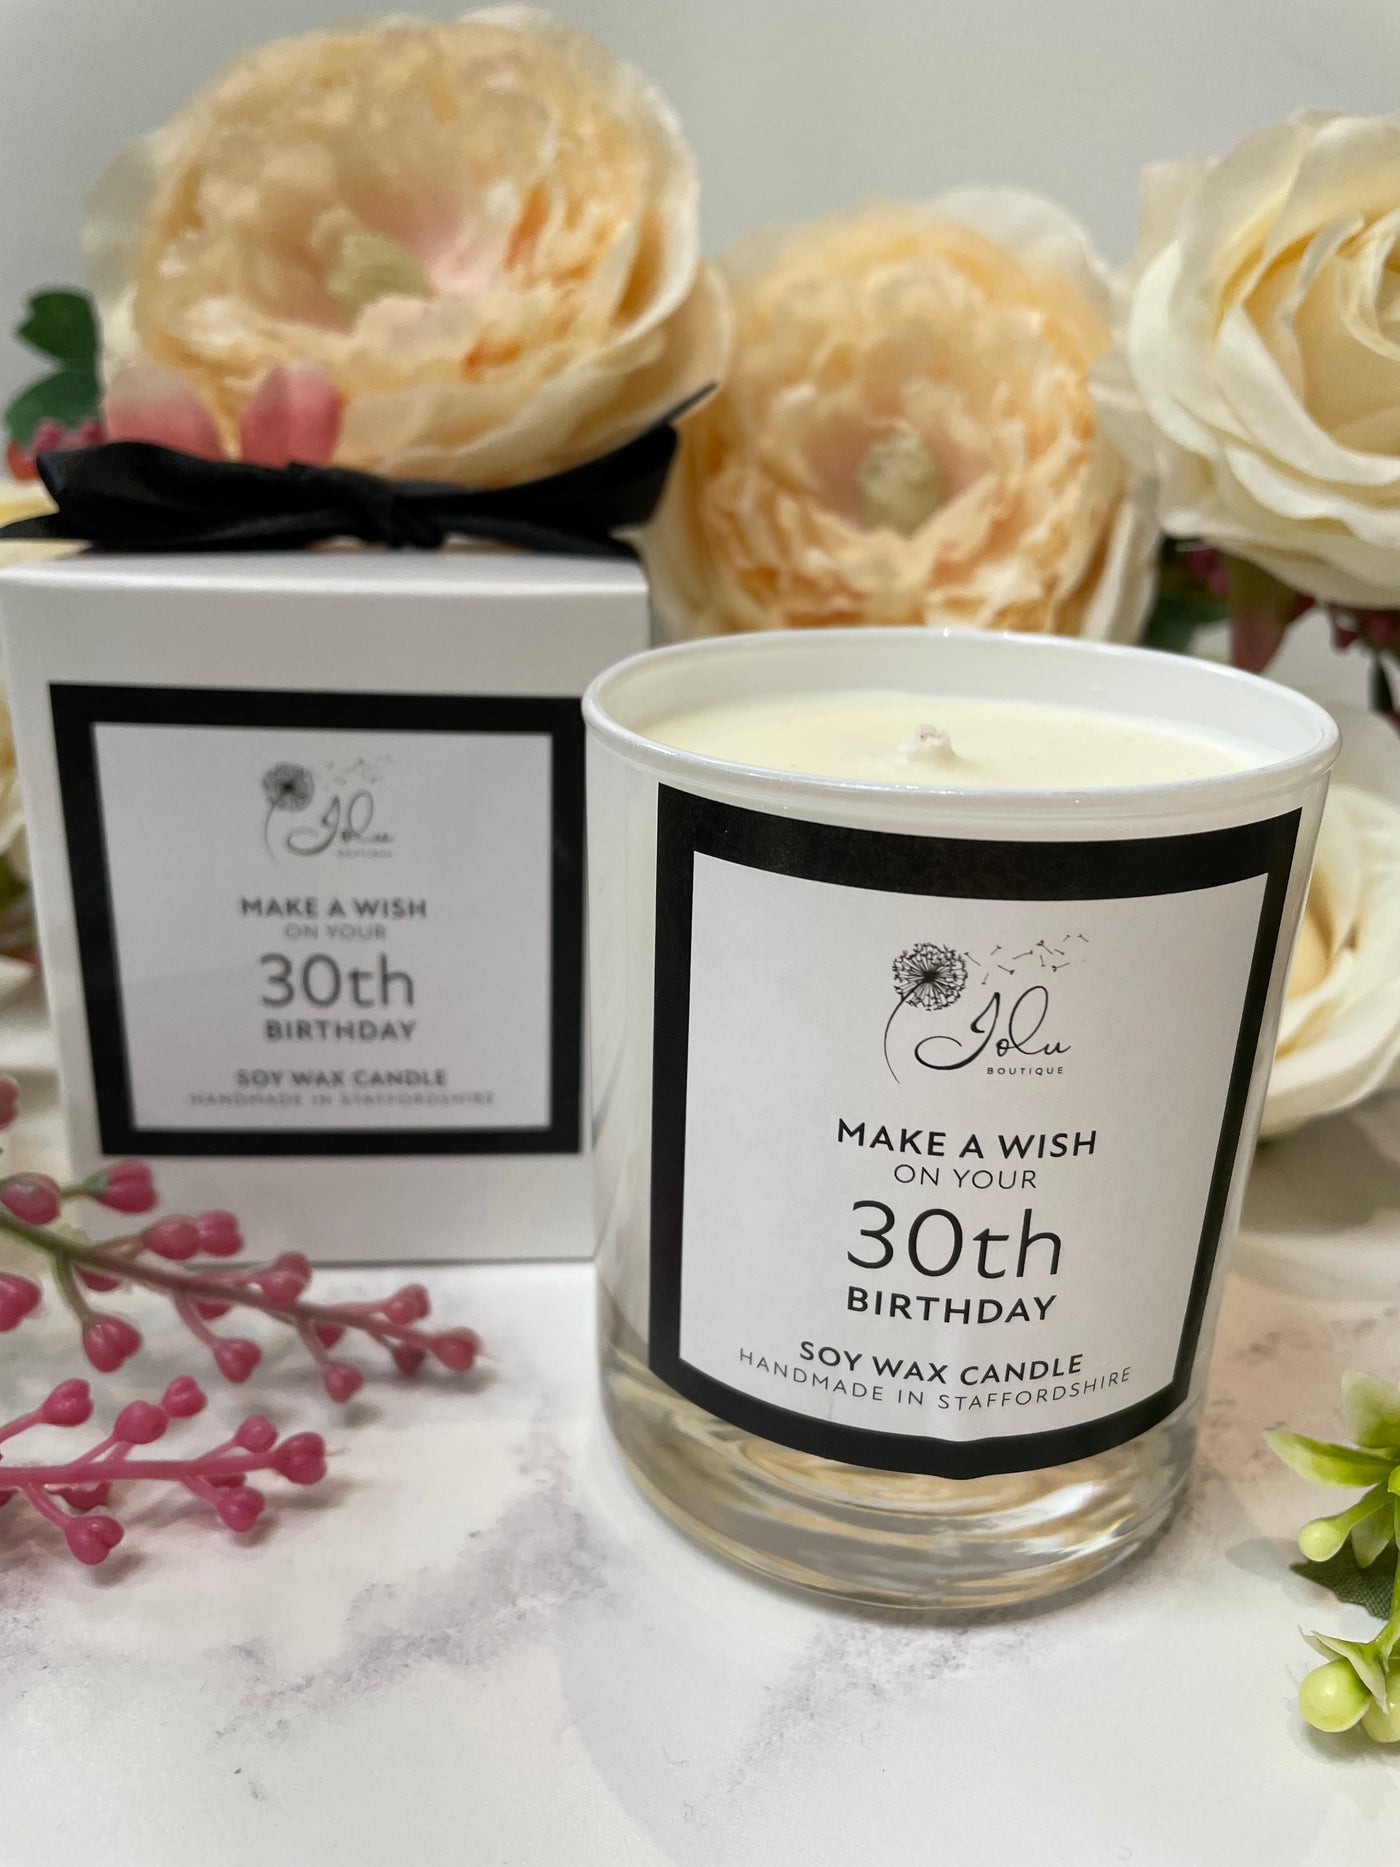 Jolu Boutique Make a Wish Sentiment Candle - 30th Birthday